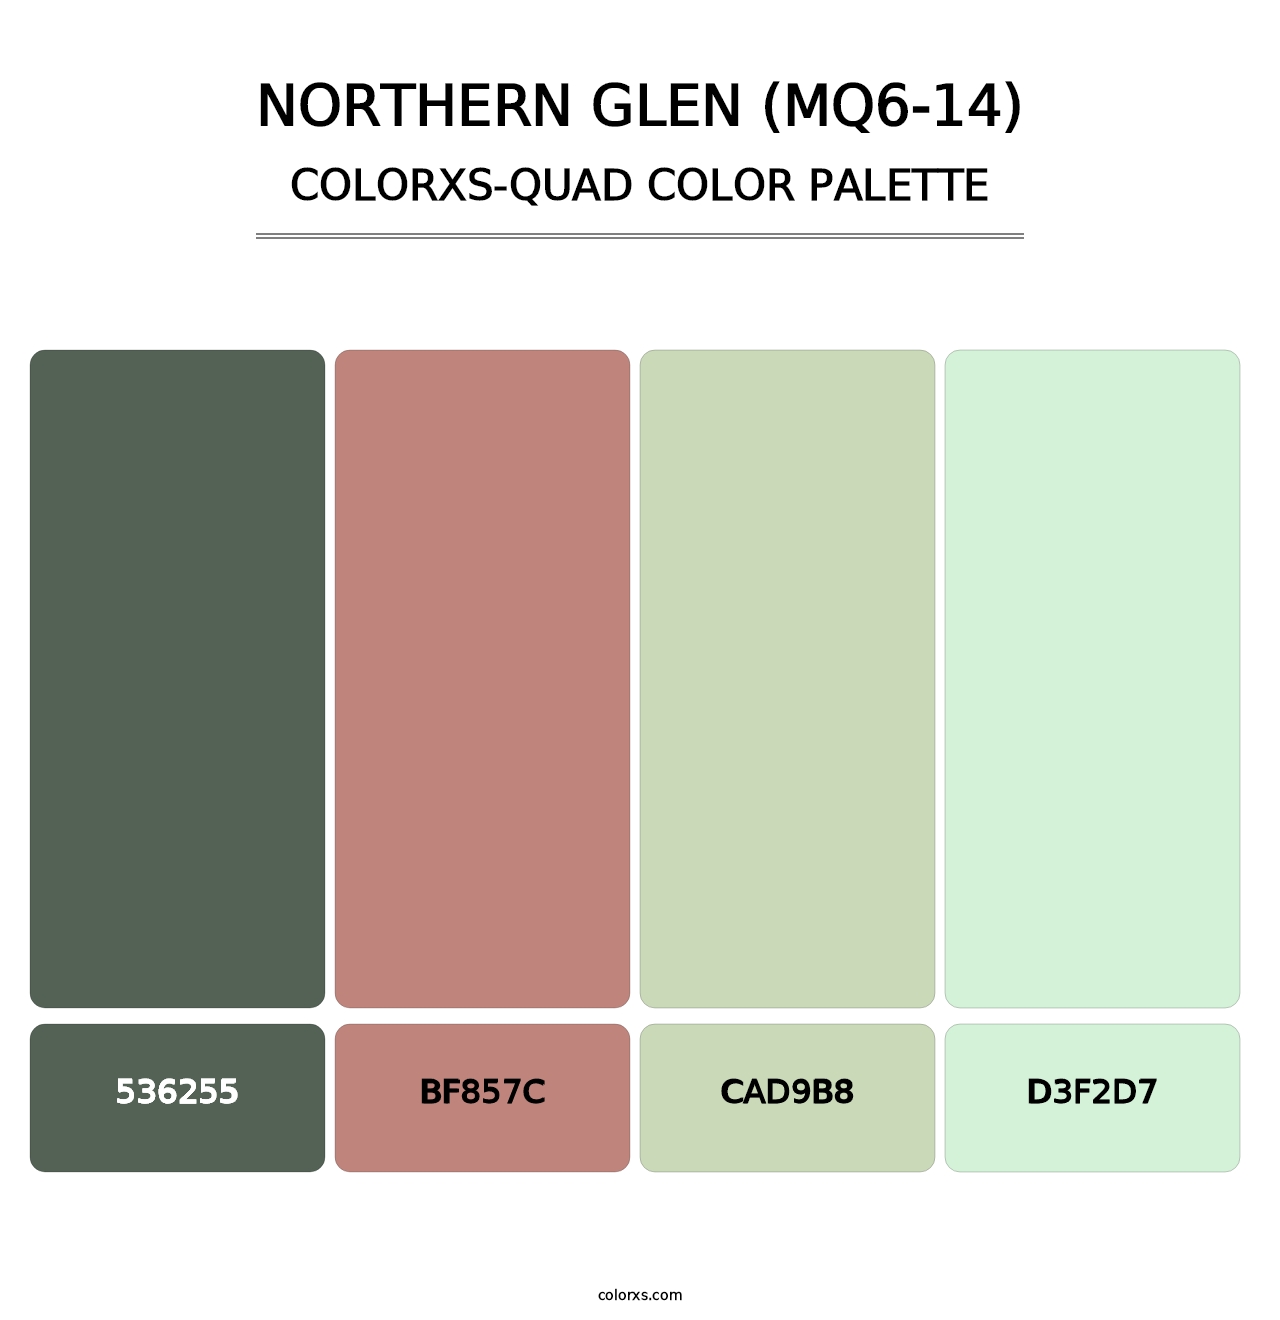 Northern Glen (MQ6-14) - Colorxs Quad Palette